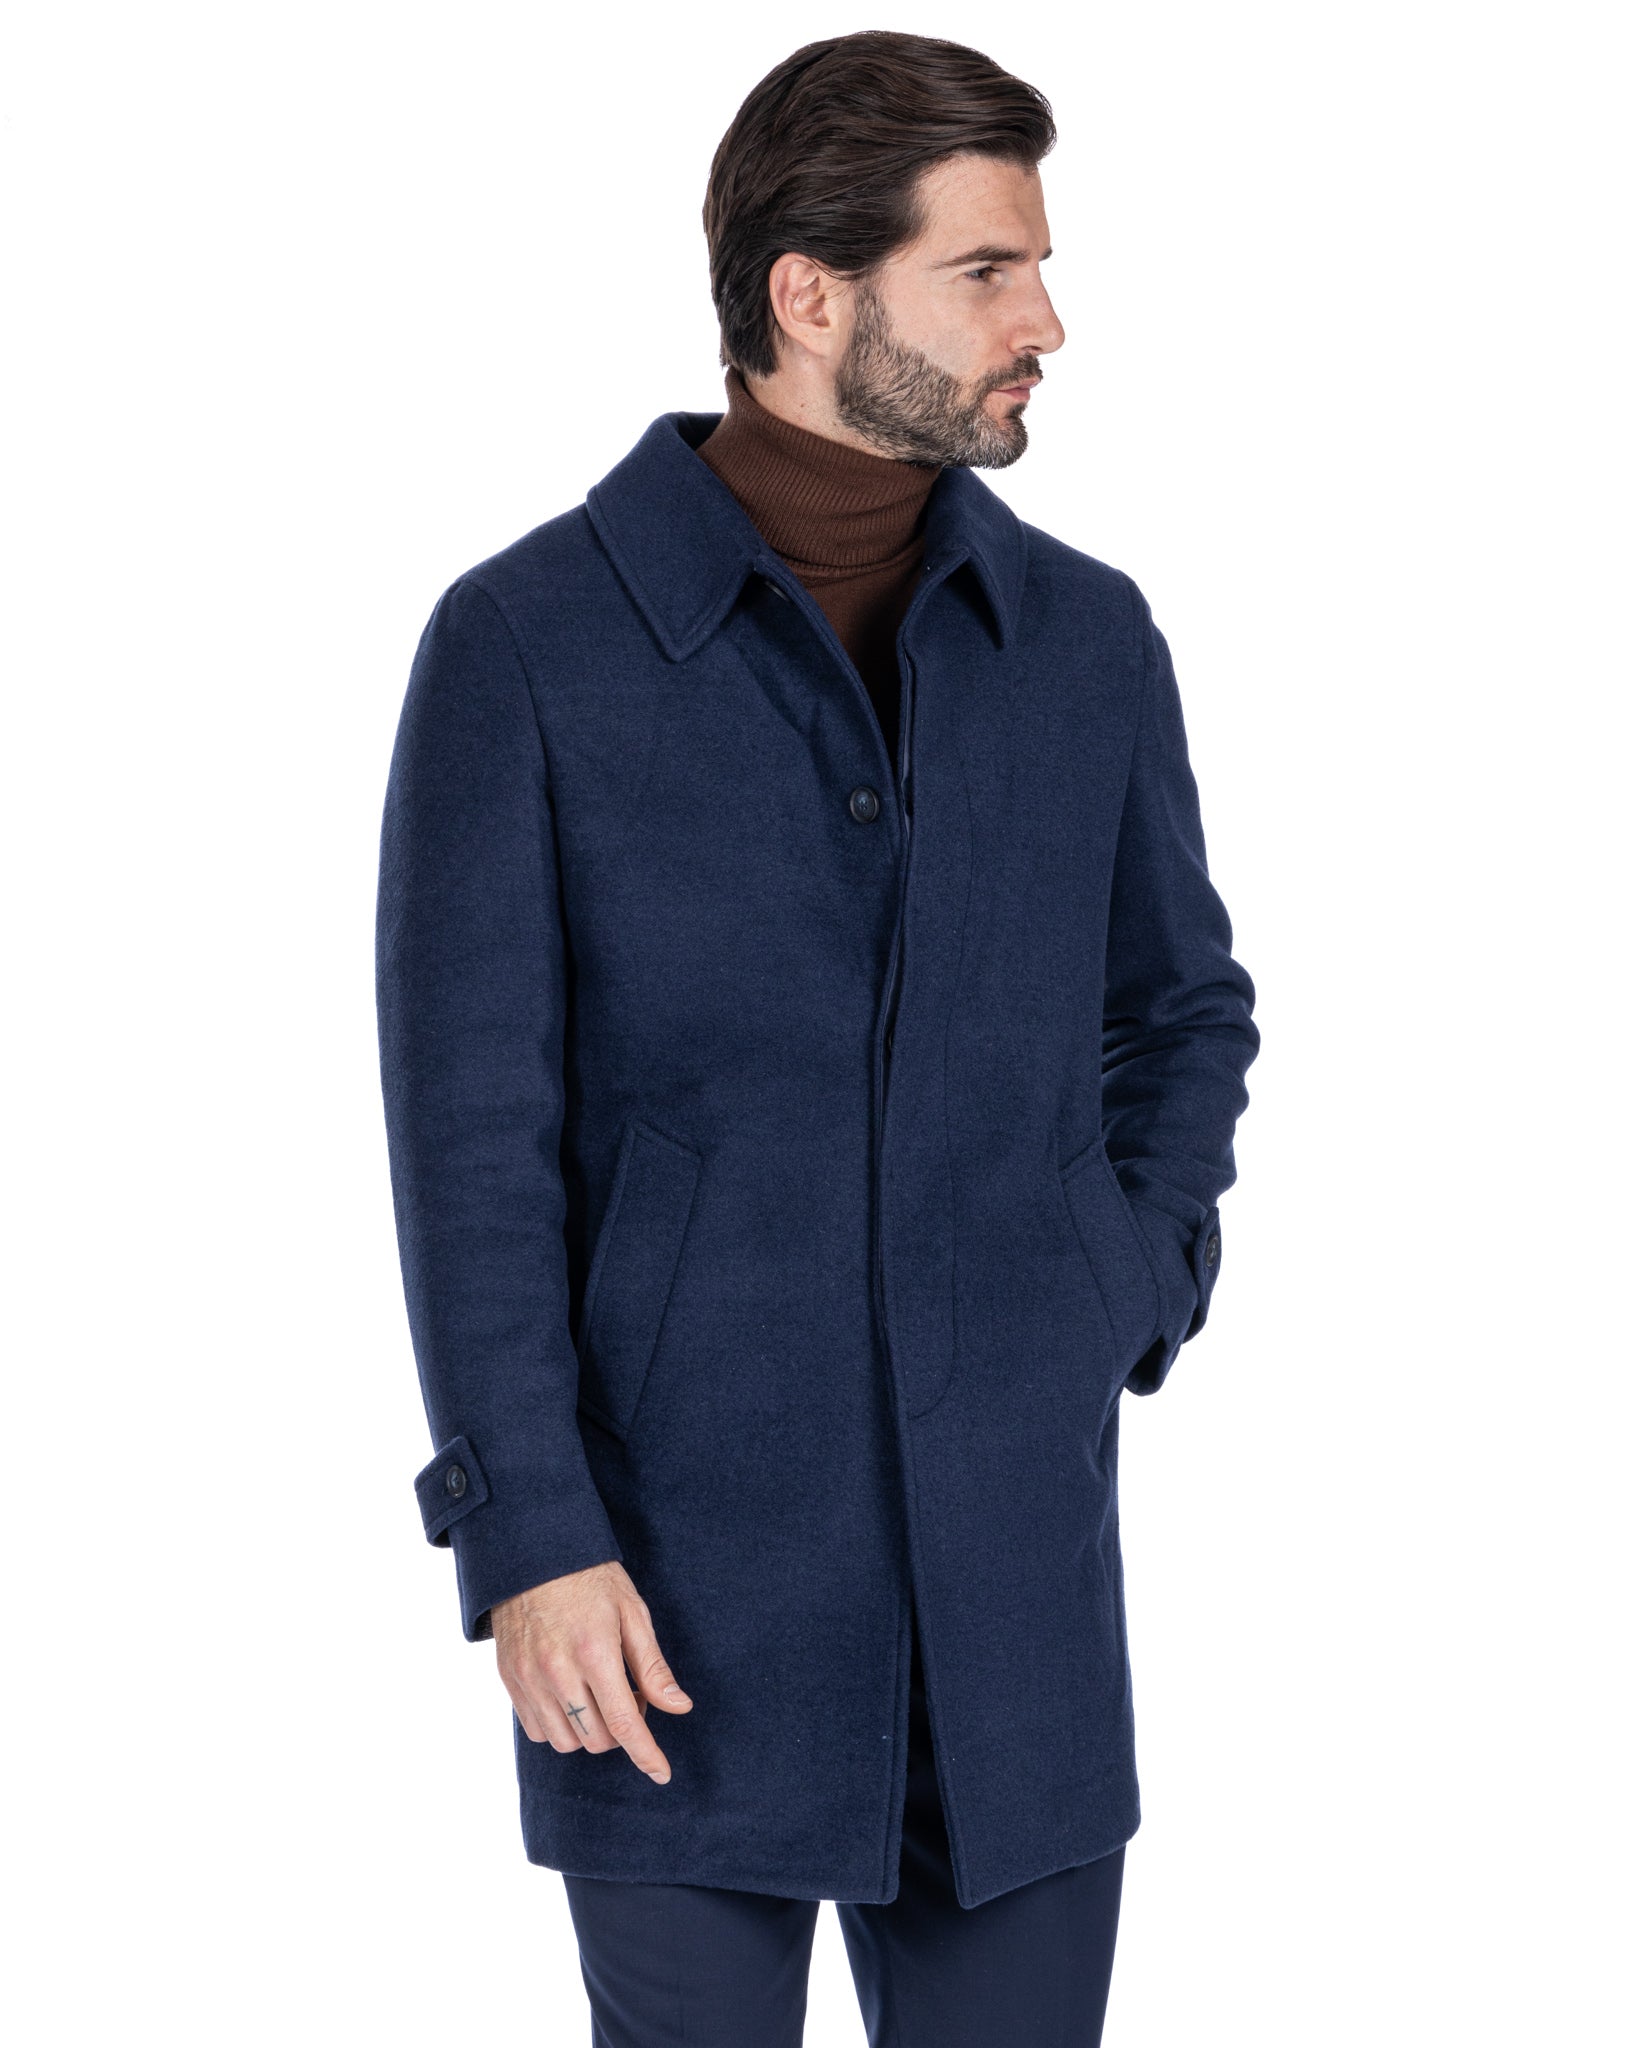 Jean - blue single-breasted coat